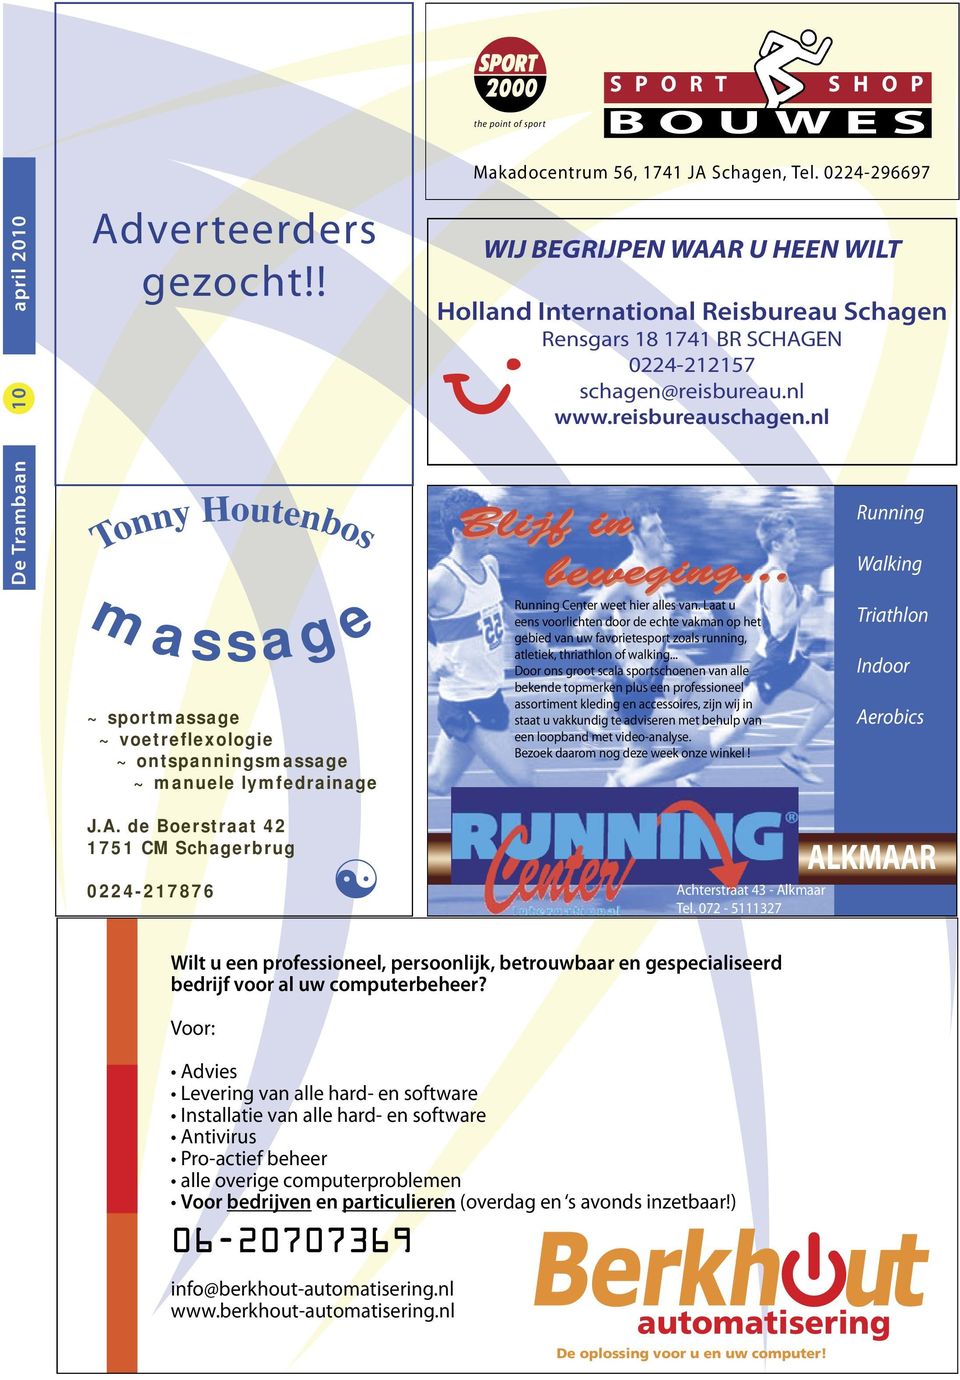 nl De Trambaan Tonny Houtenbos massage ~ sportmassage ~ voetreflexologie ~ ontspanningsmassage ~ manuele lymfedrainage Running Center weet hier alles van.